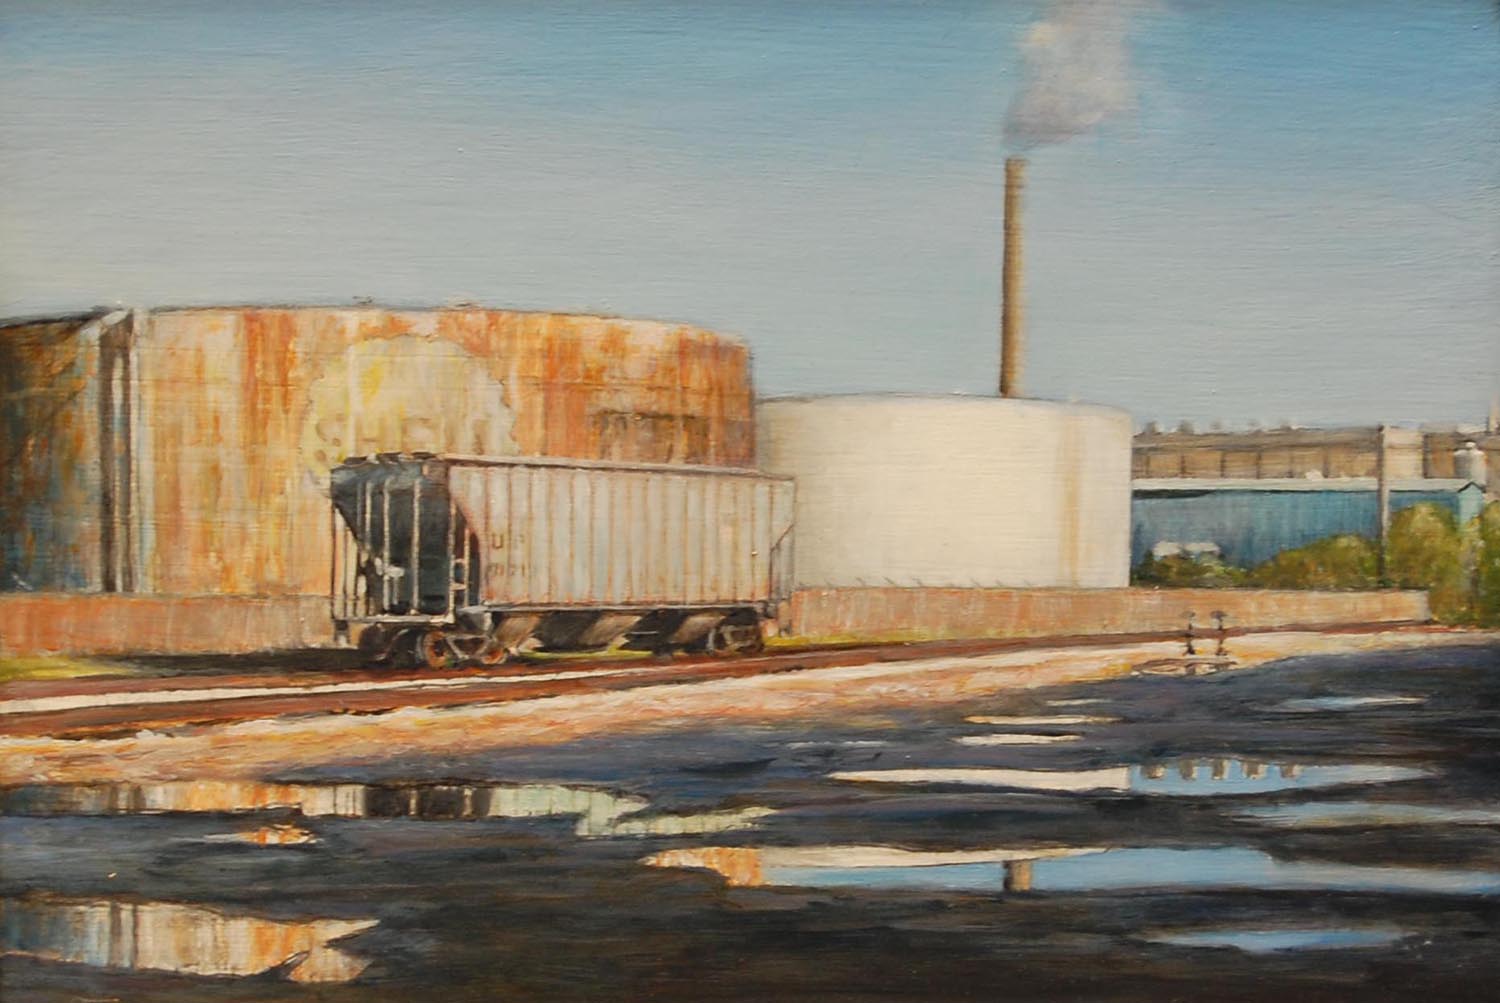   Train Car, Port of Milwaukee   2012  Oil on canvas  8 x 10 inches       